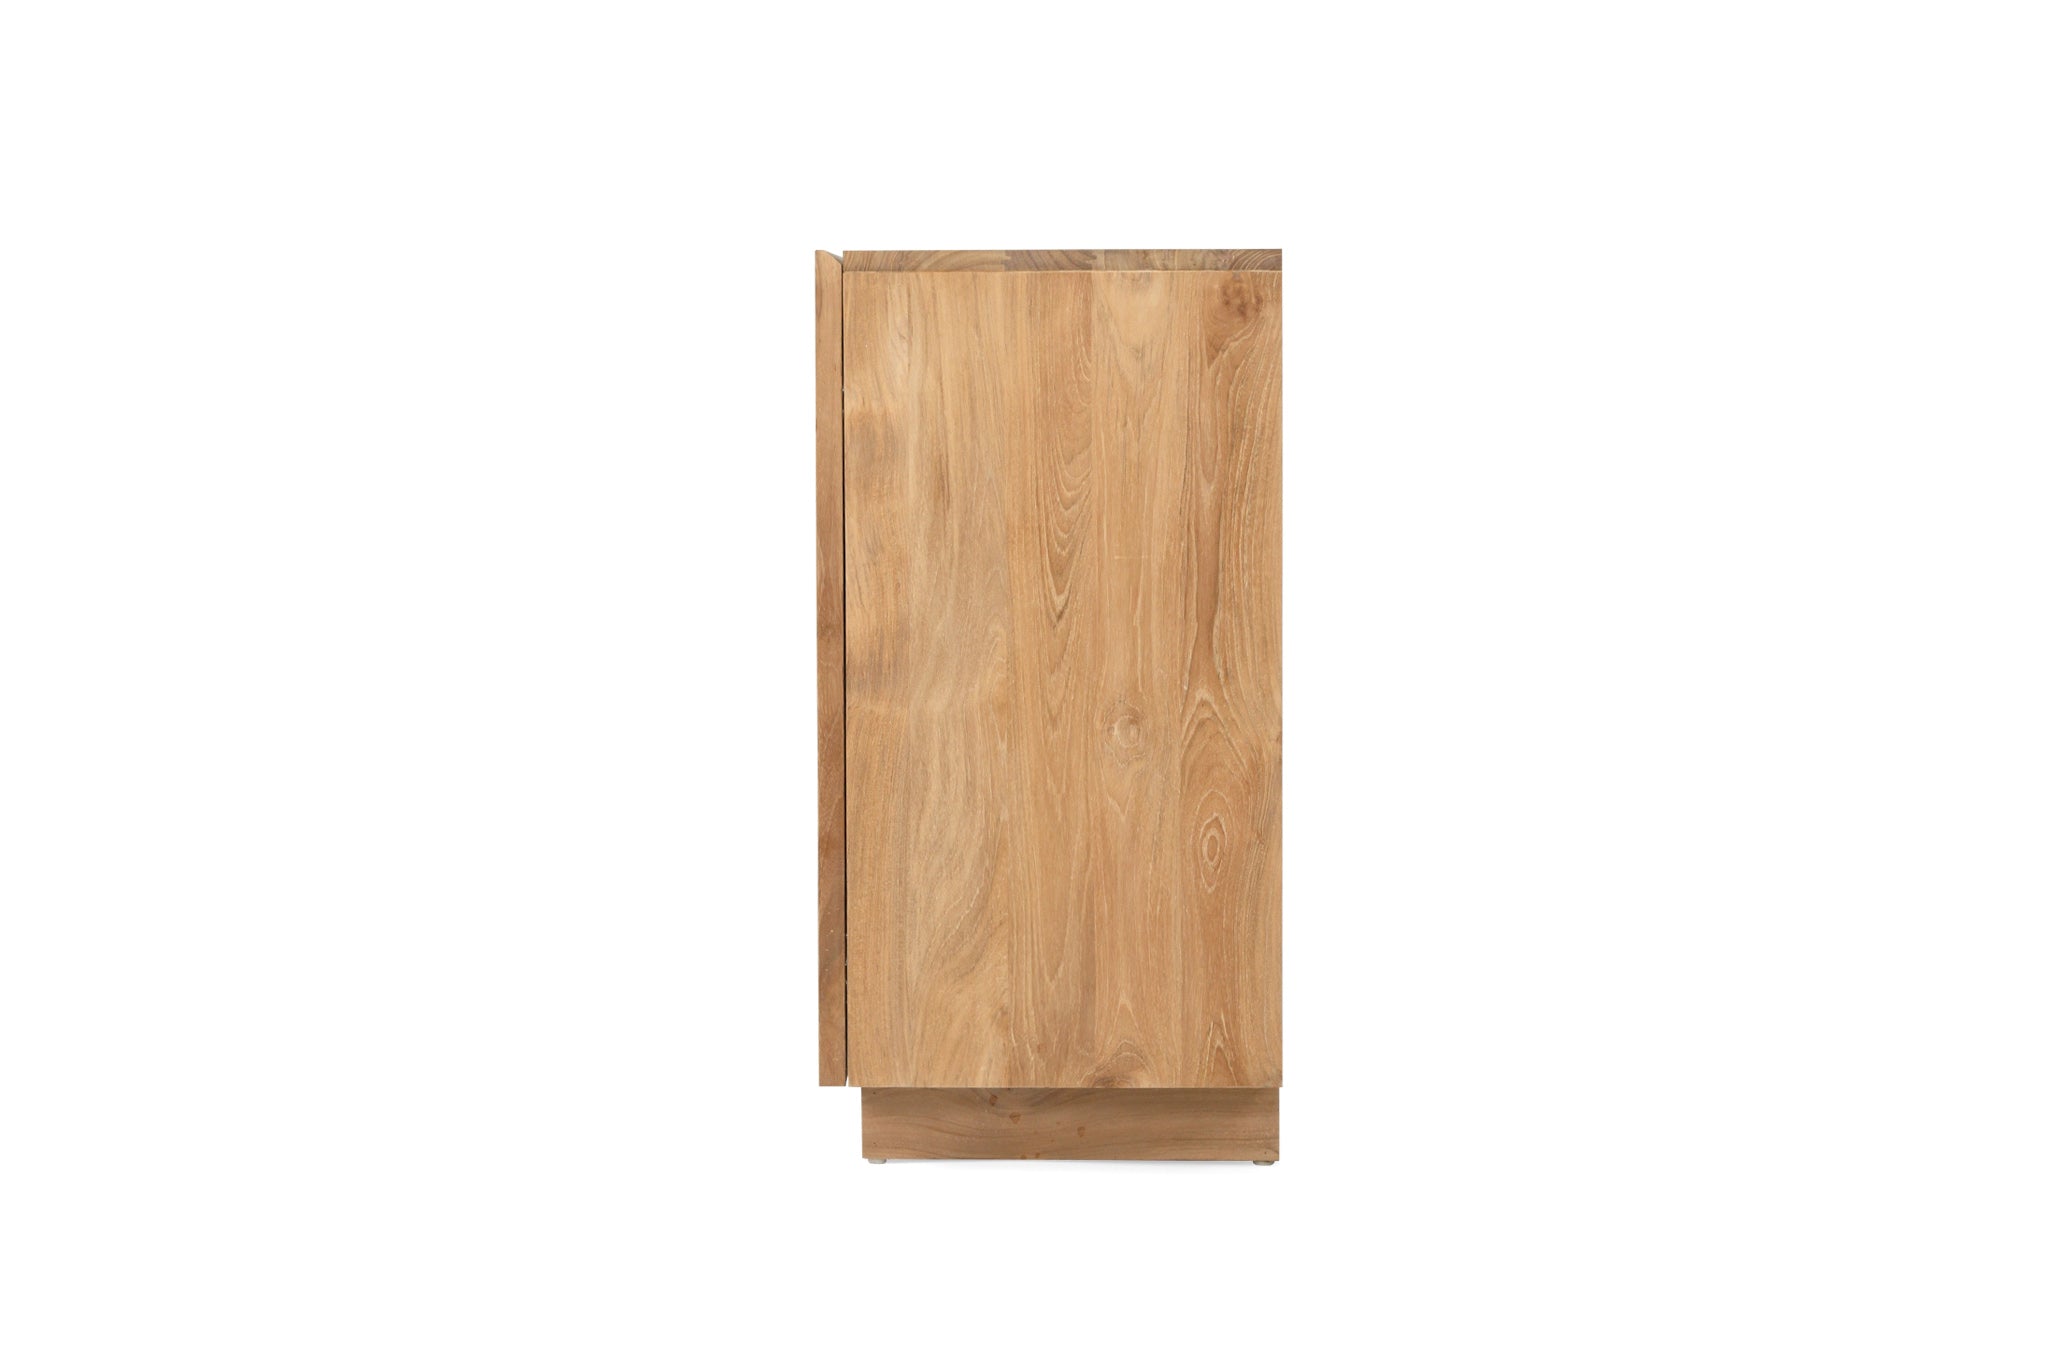 Ravenna Teak & Rattan 3 Door Sideboard – Natural